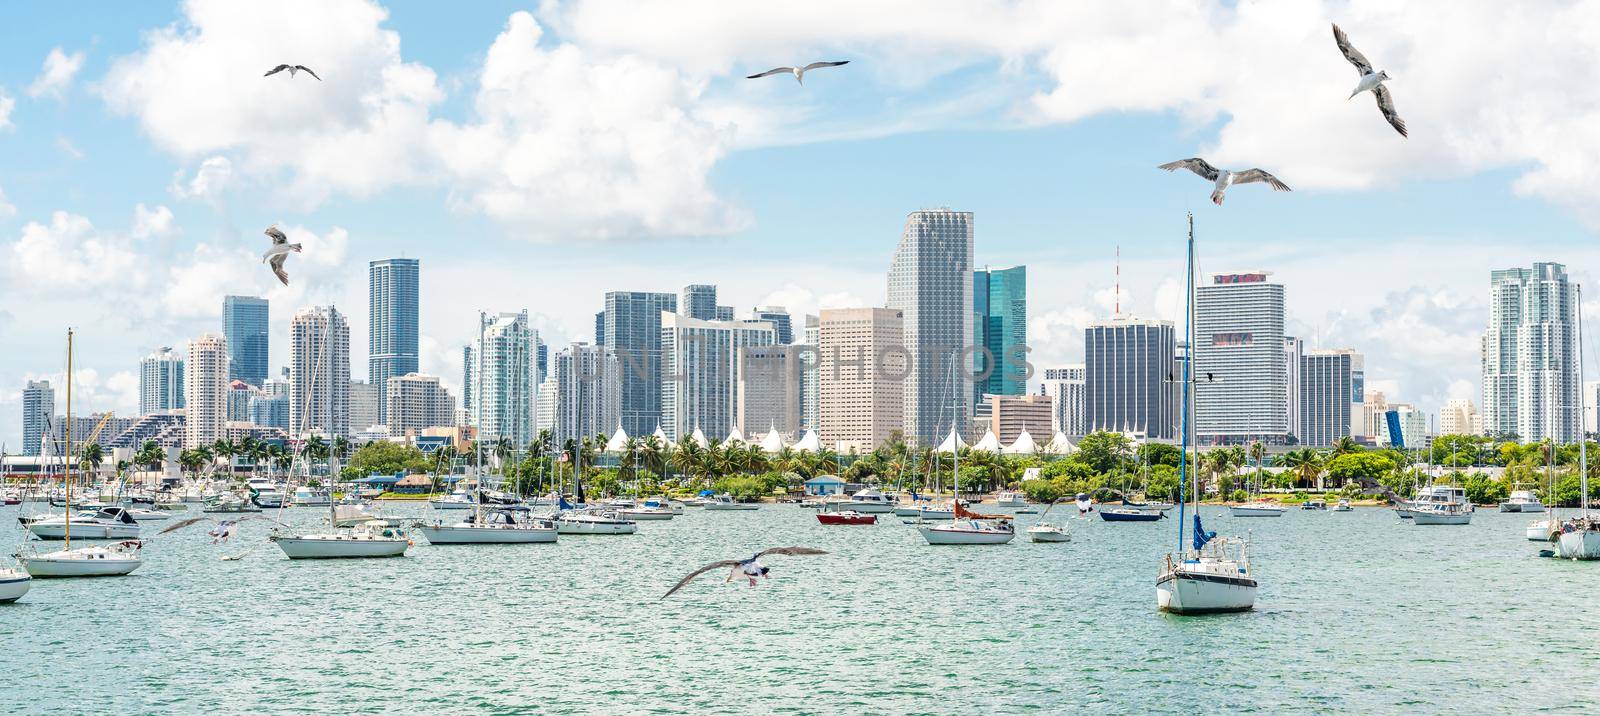 Miami skyline with many yachts and boats